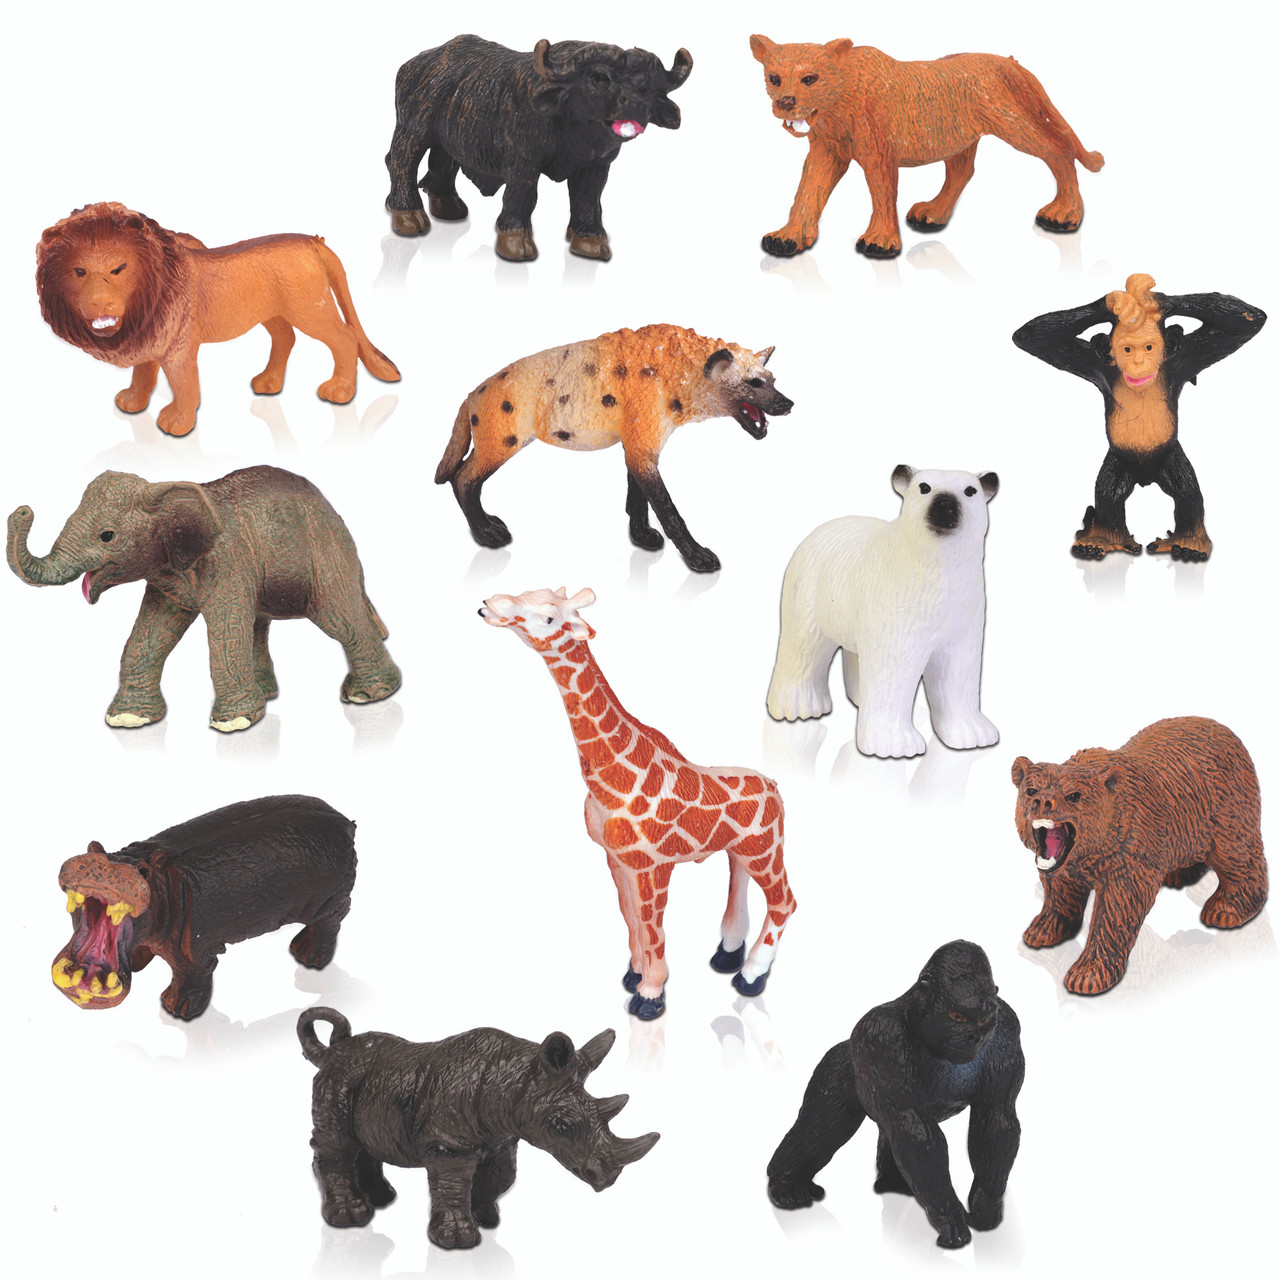 small plastic bear figurines